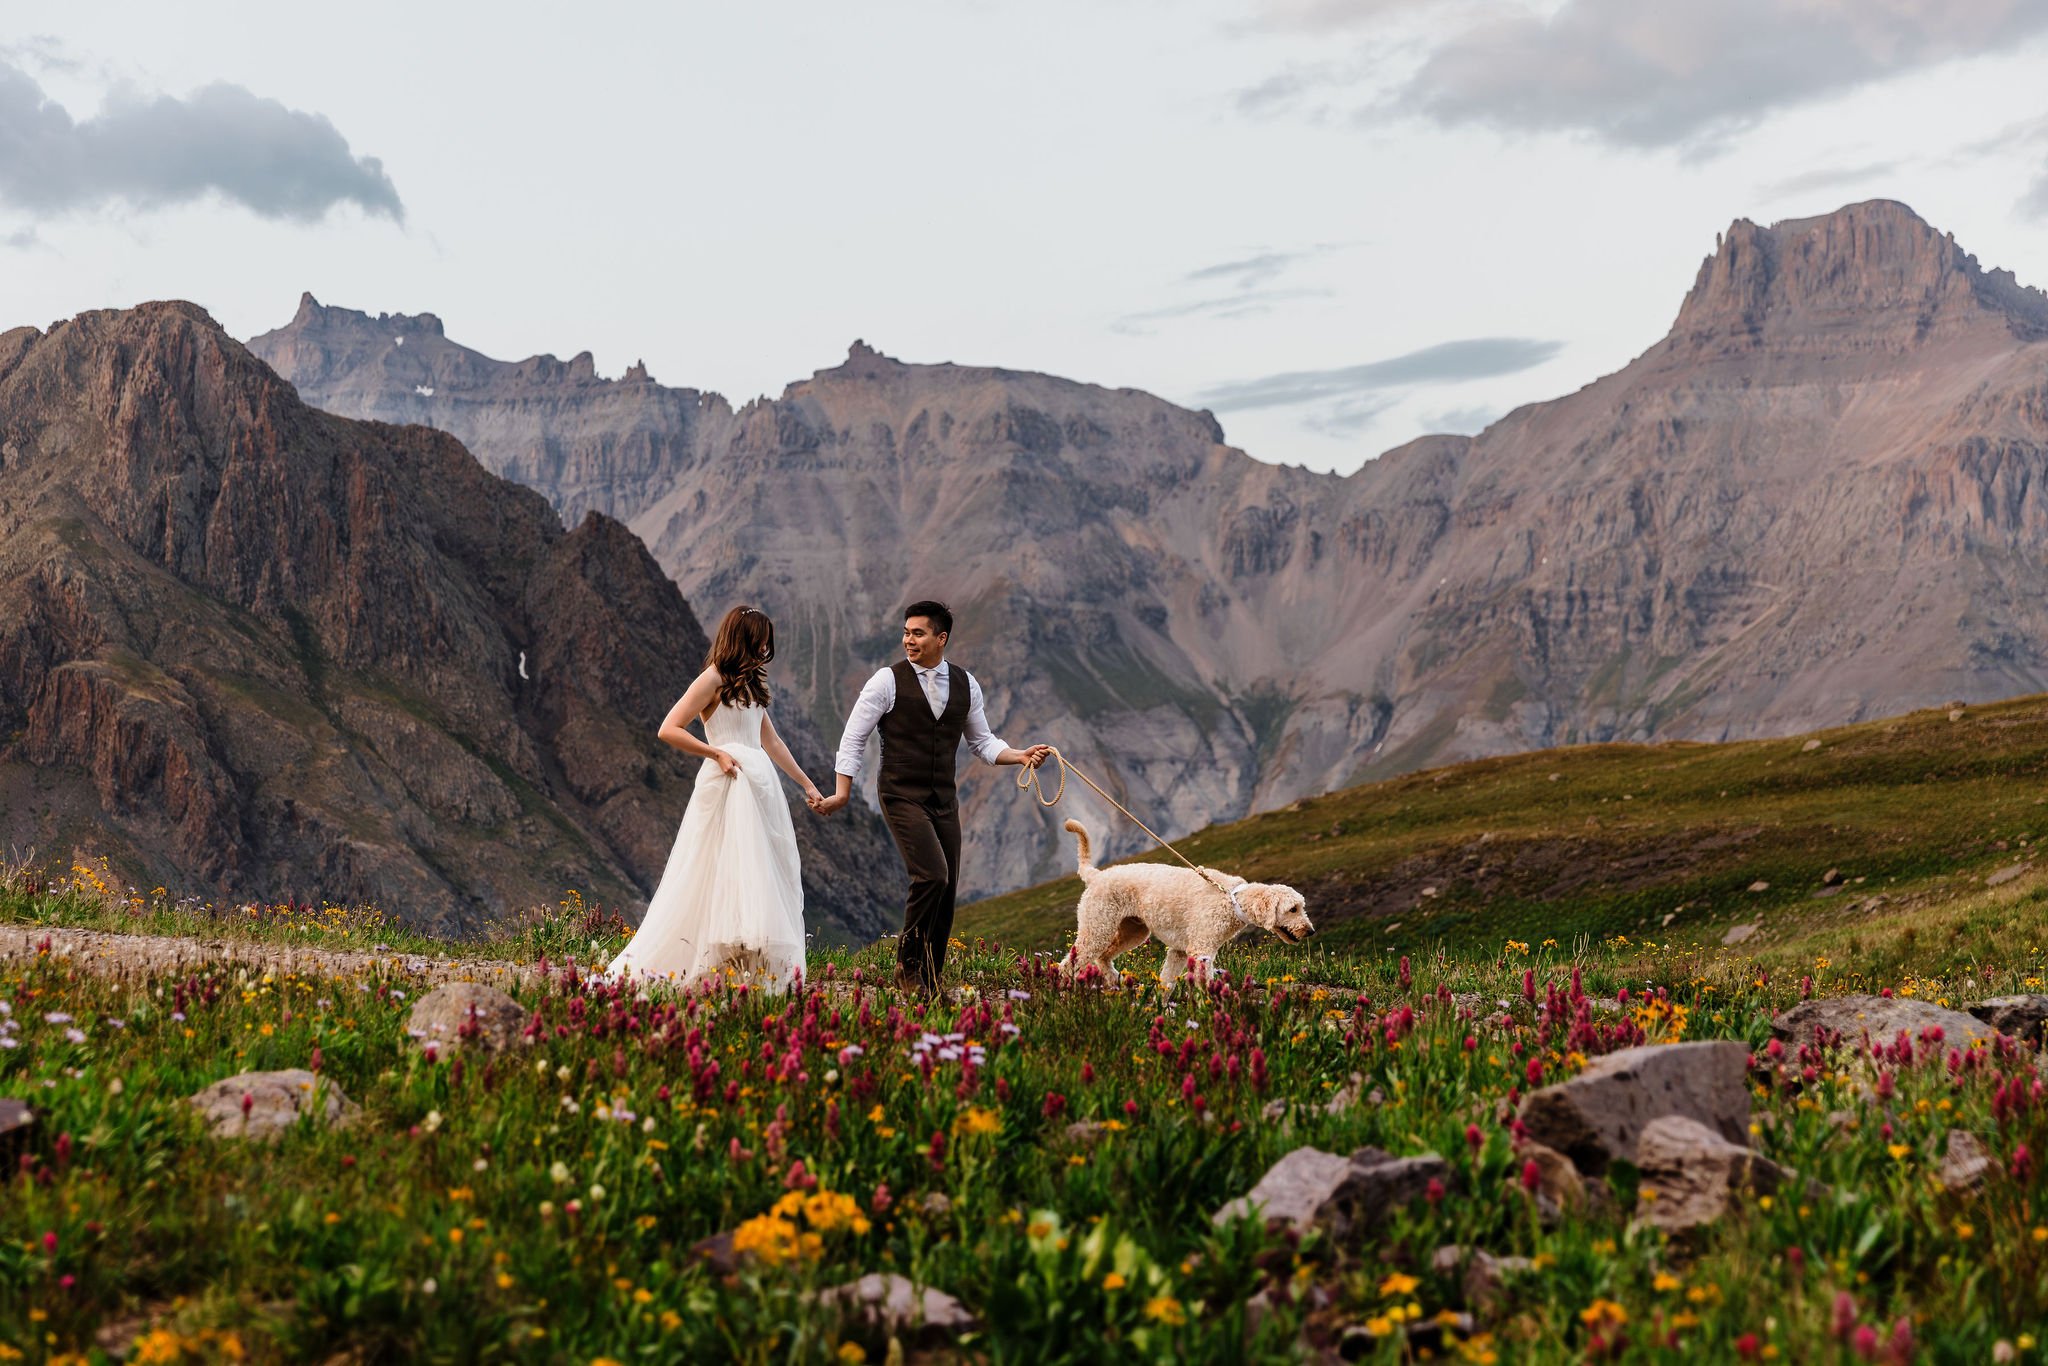 Best Luxury Wedding Planners (Colorado, Florida and Destination)